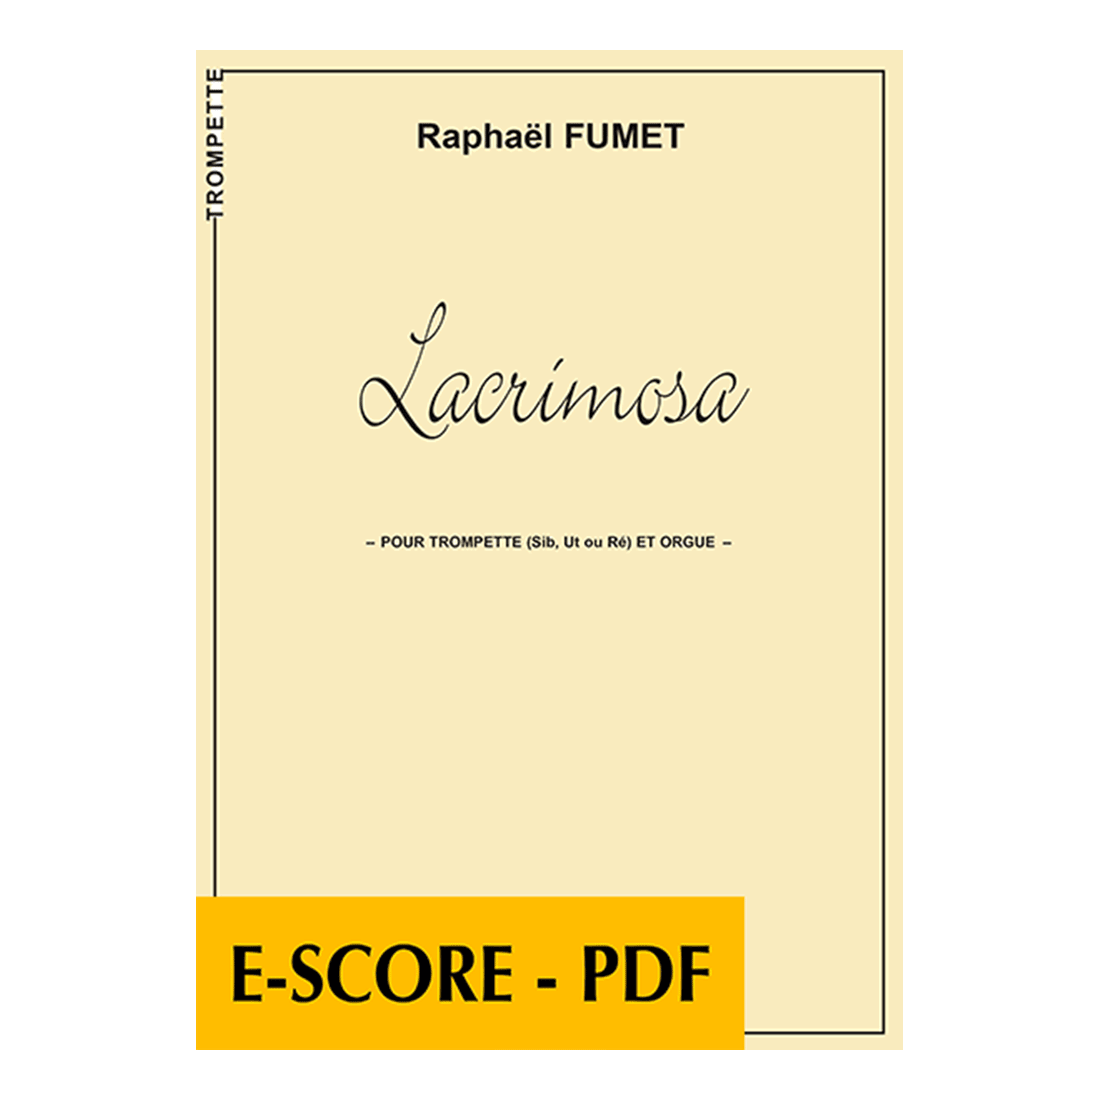 Lacrimosa für Trompete und Orgel - E-score PDF